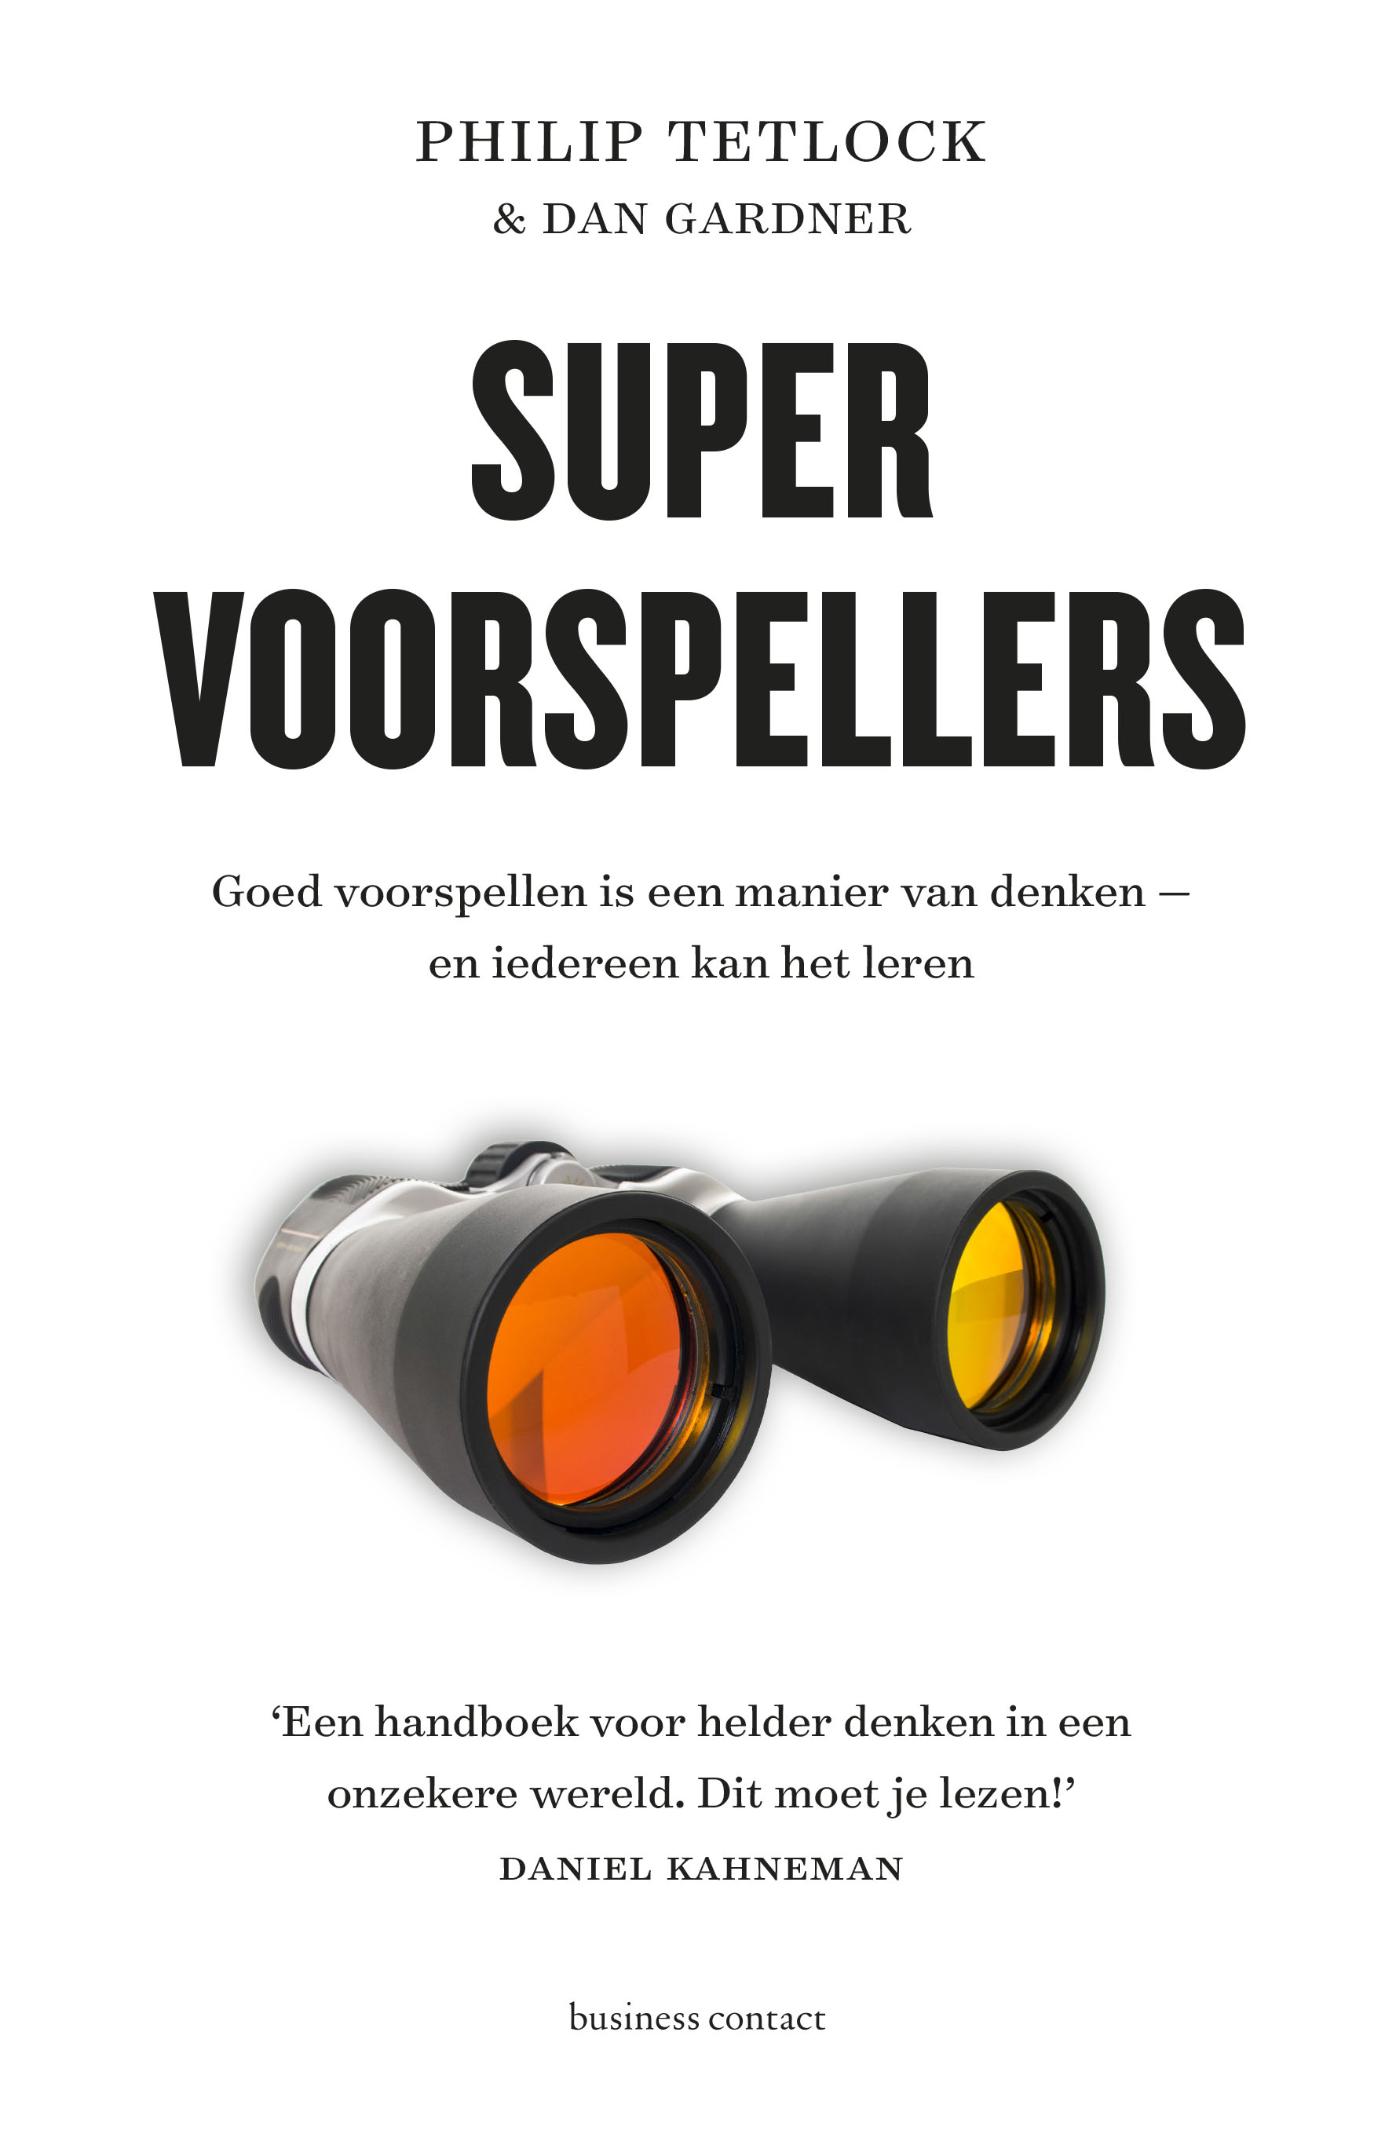 Super voorspellers (Ebook)